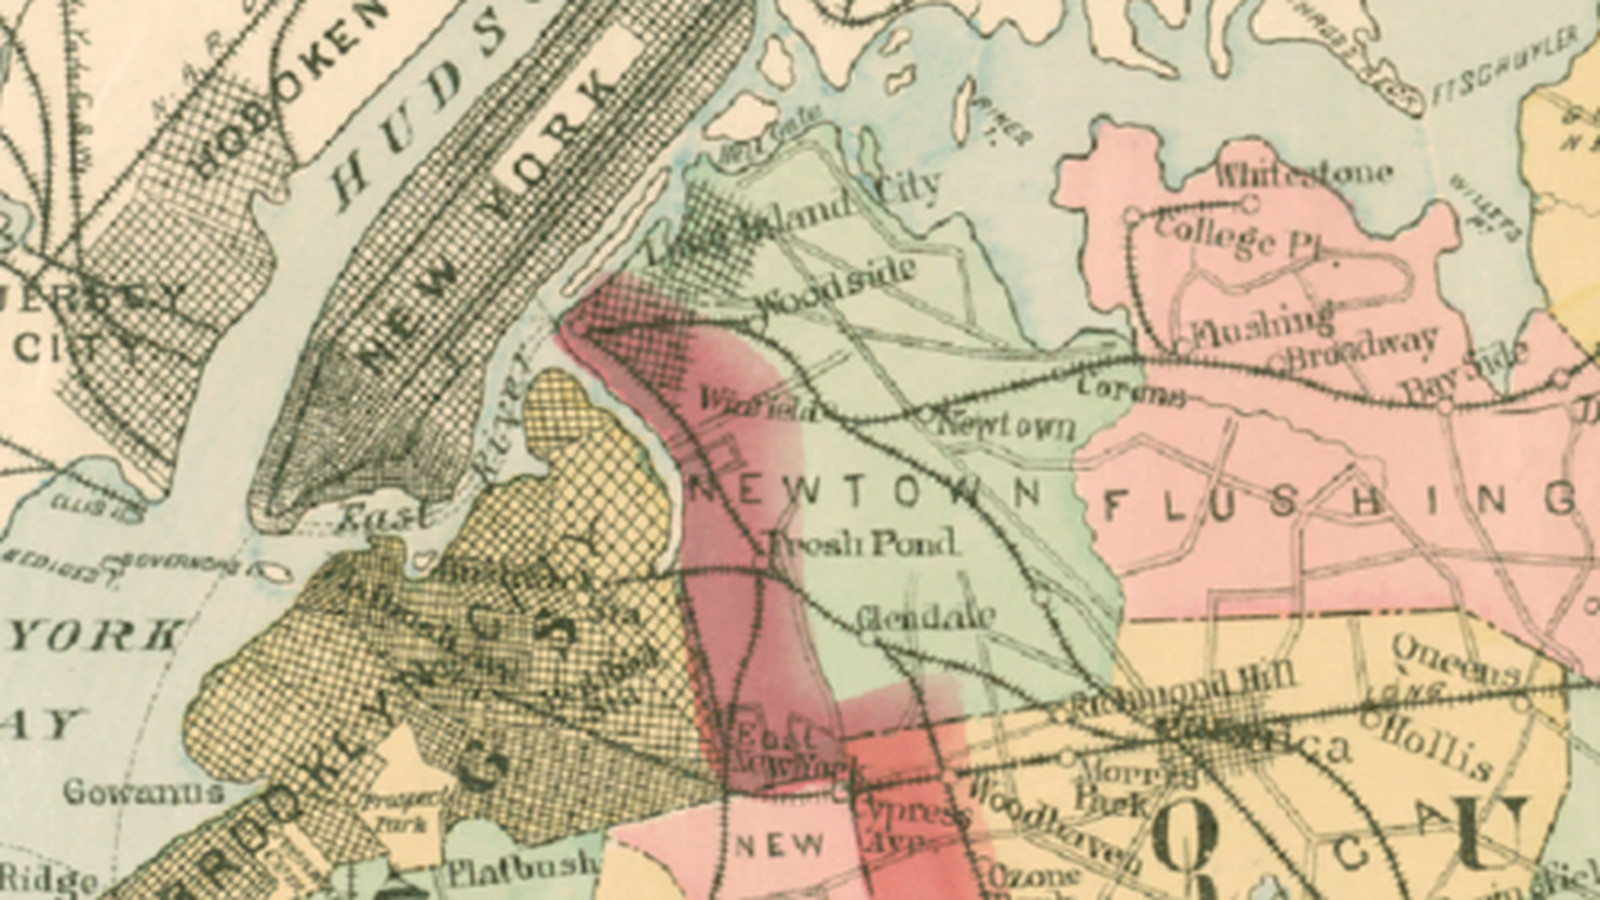 Borough of Queens NY c1918 map 24x30 